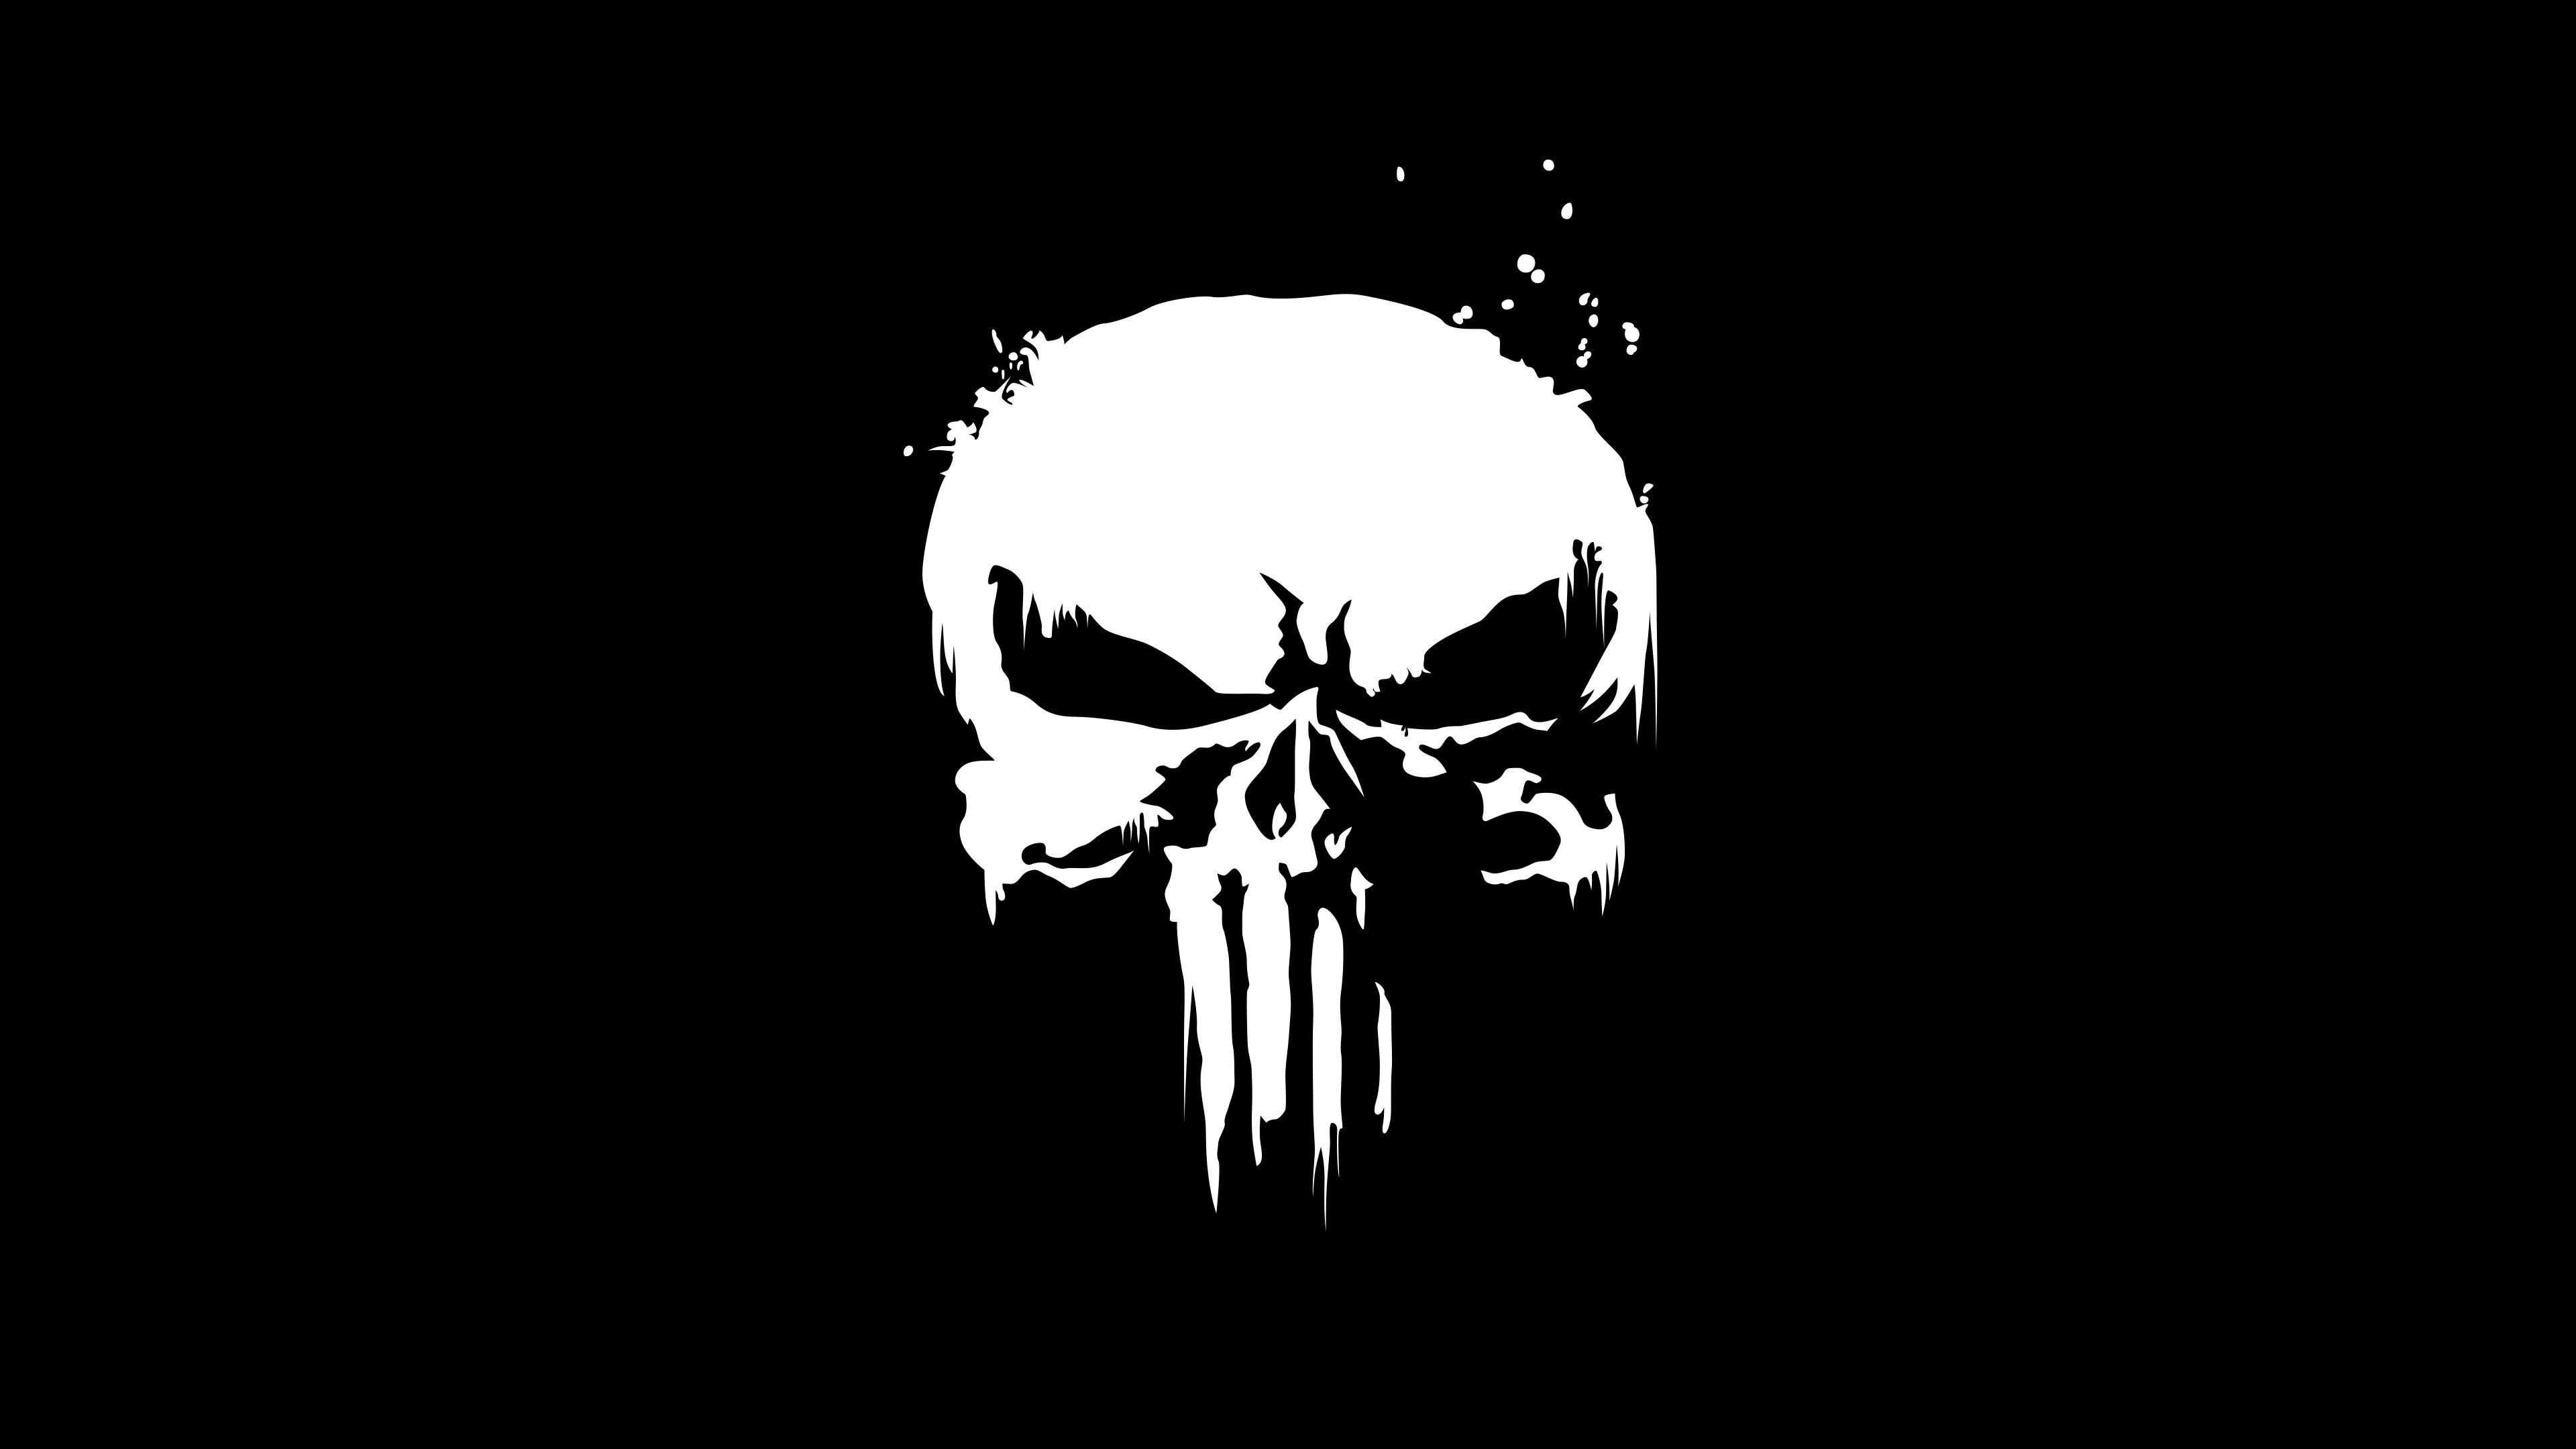 Wallpaper Punisher, Logo, Skull, Dark background, Minimal, 4K, Creative Graphics,. Wallpaper for iPhone, Android, Mobile and Desktop